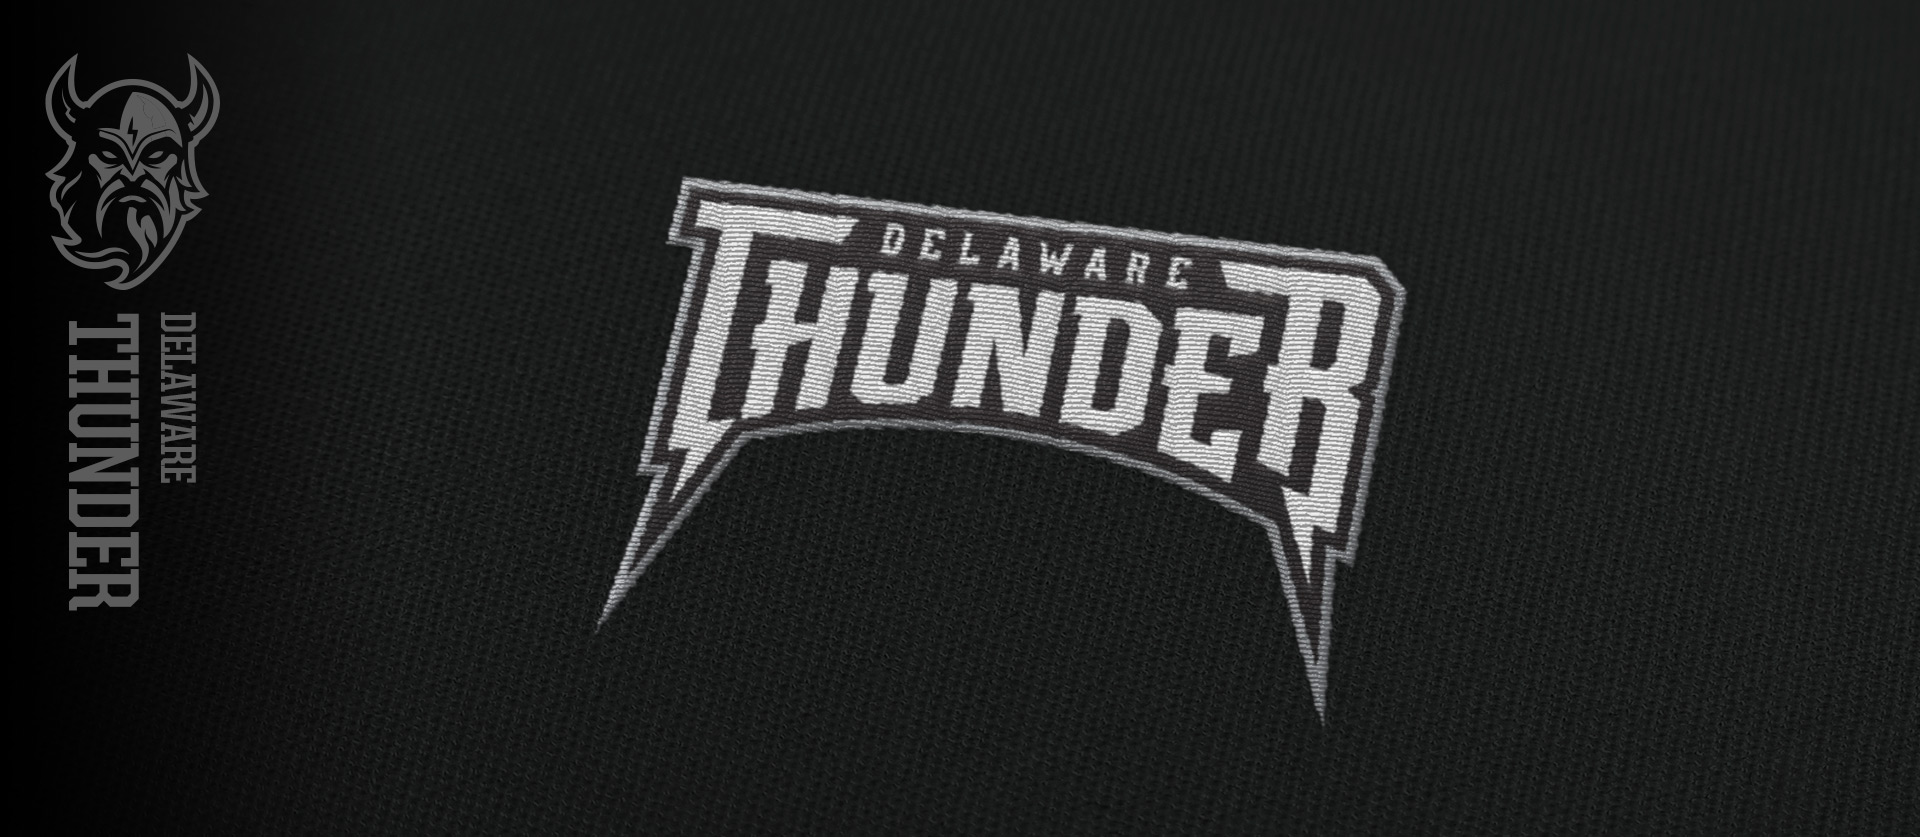 Delaware Thunder Uniforms Close-up Text federal hockey league team design